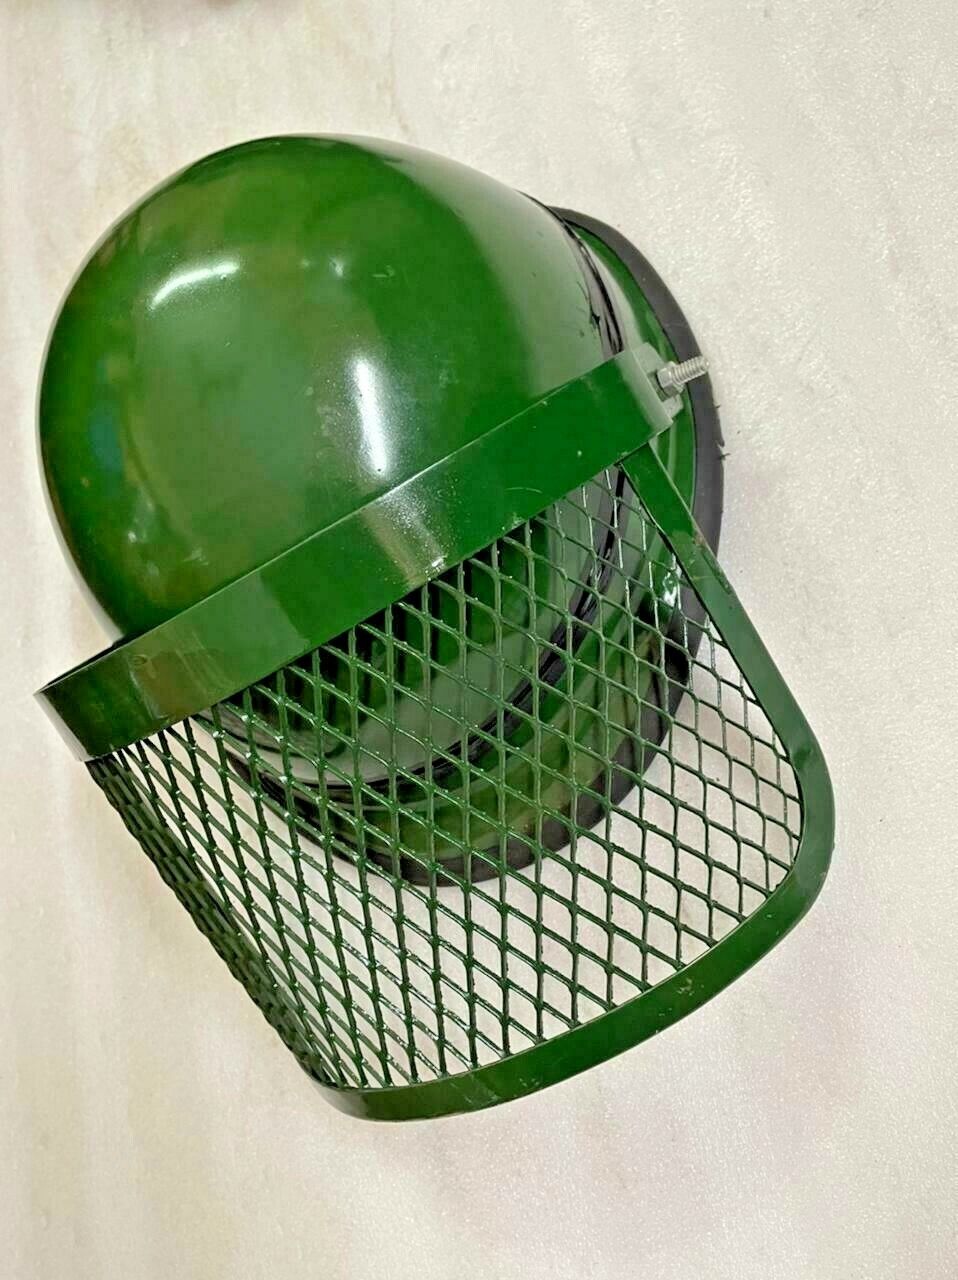 Riot Helmet + 2 Previous Helmet